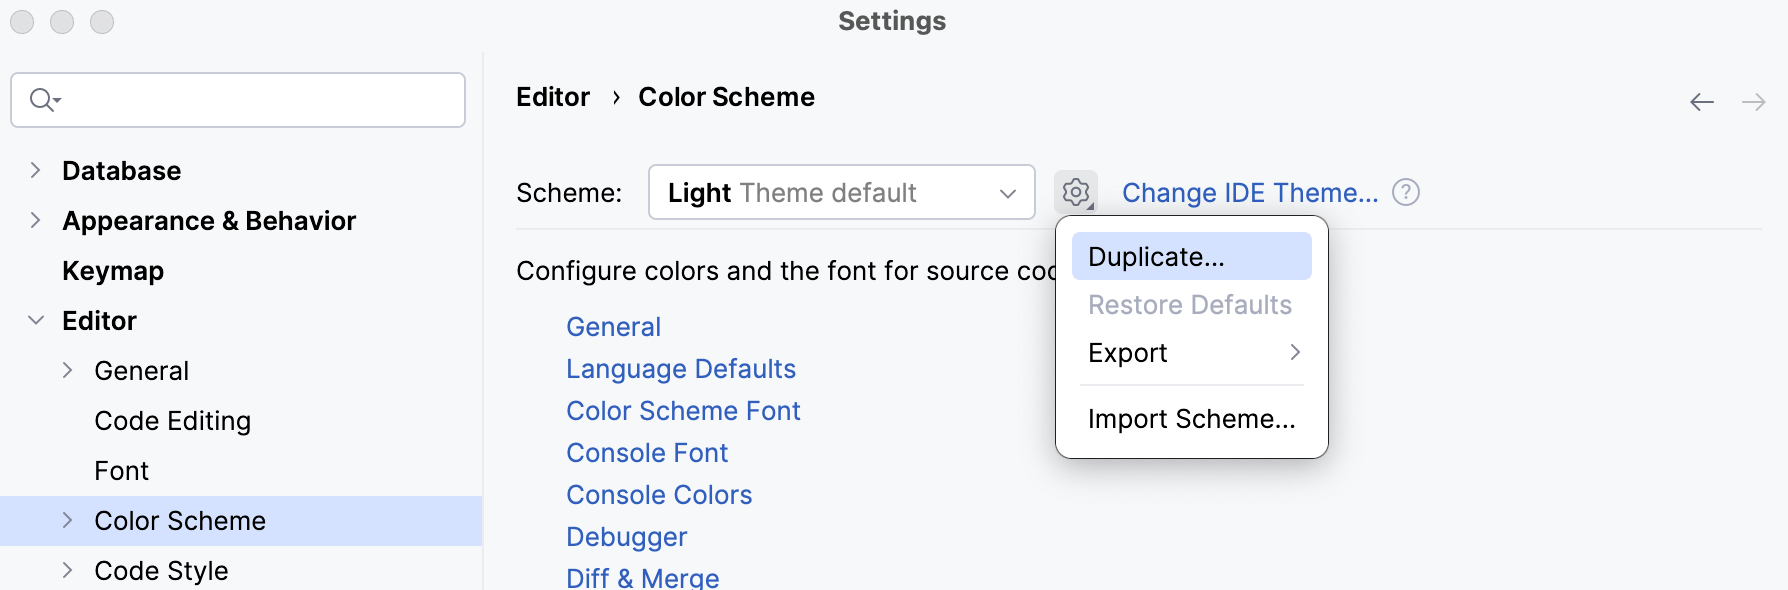 Duplicate a color scheme